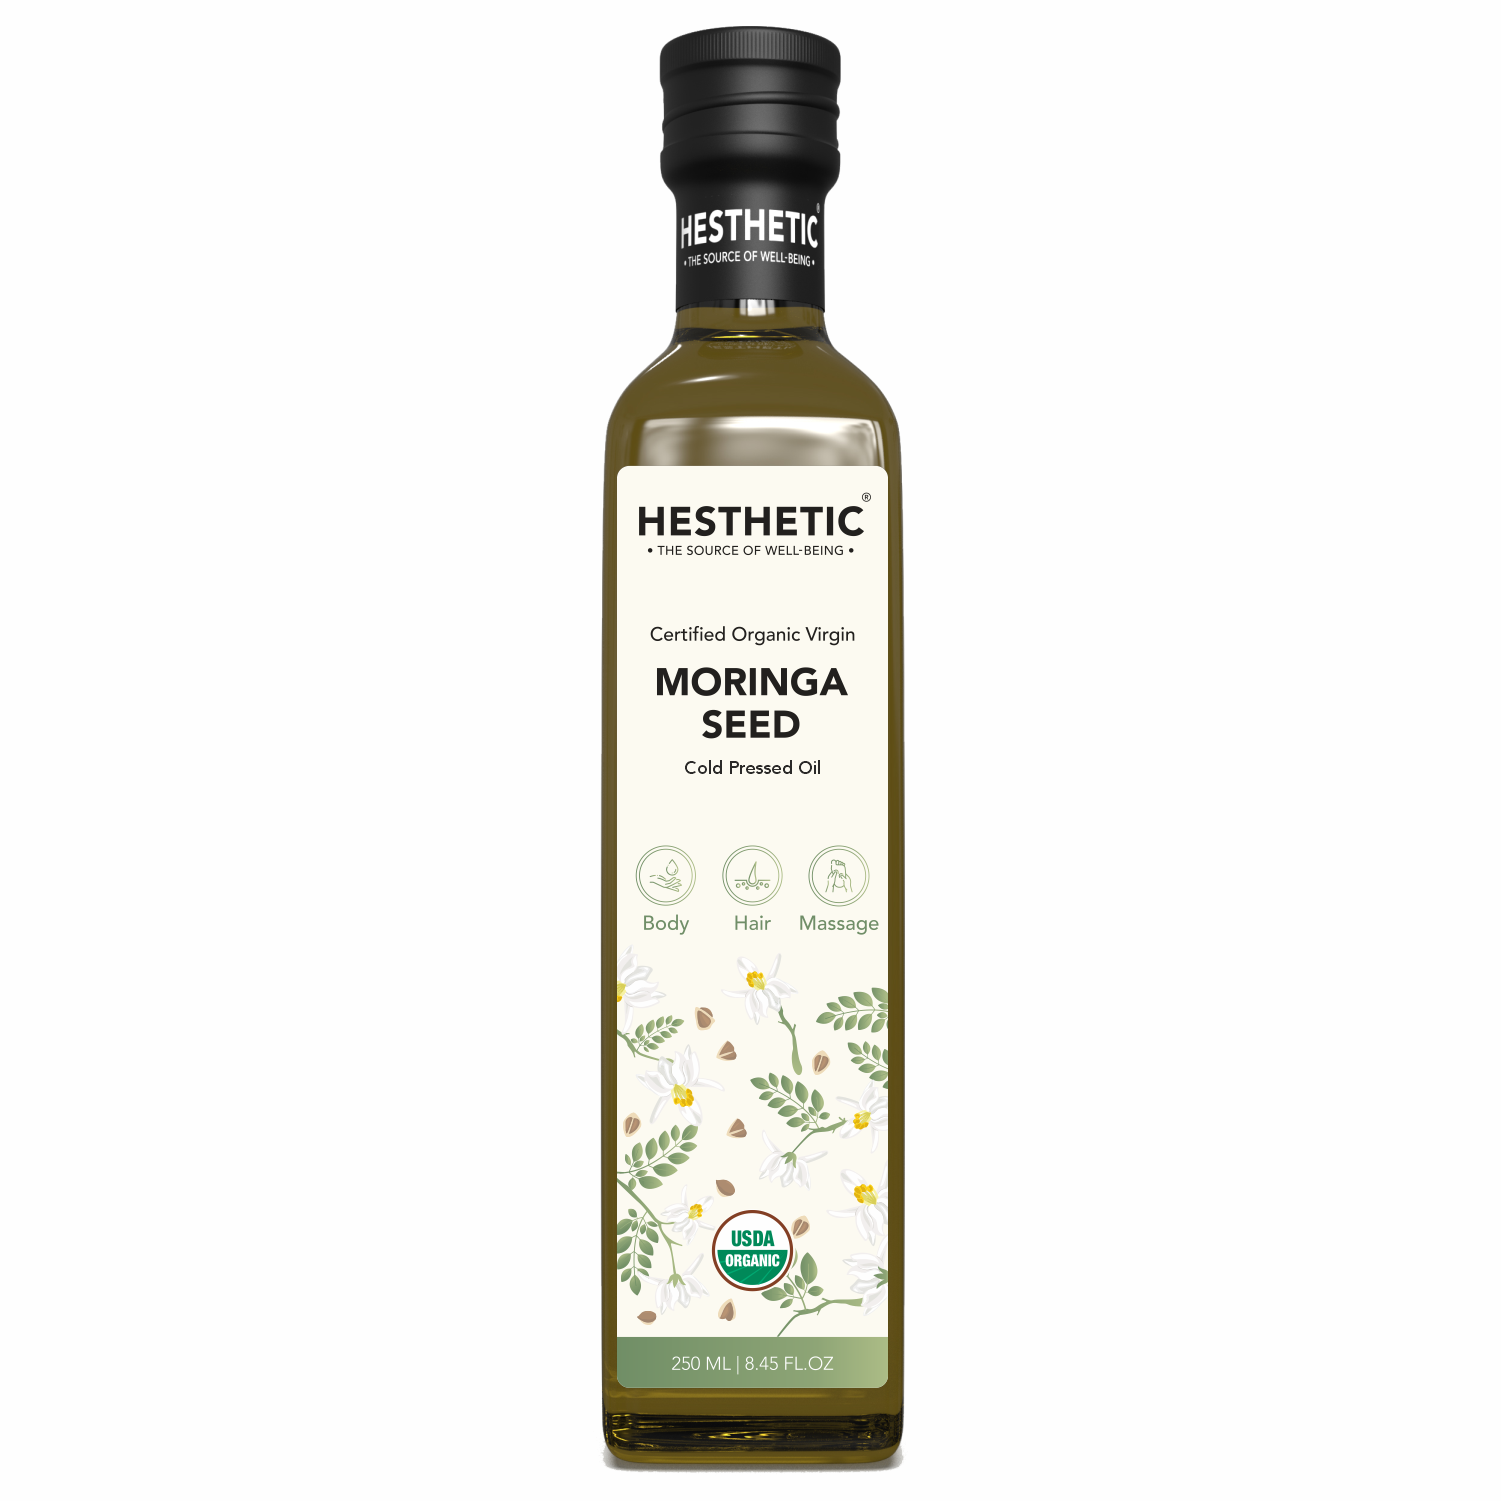 Virgin Cold-Pressed Moringa Seed Oil